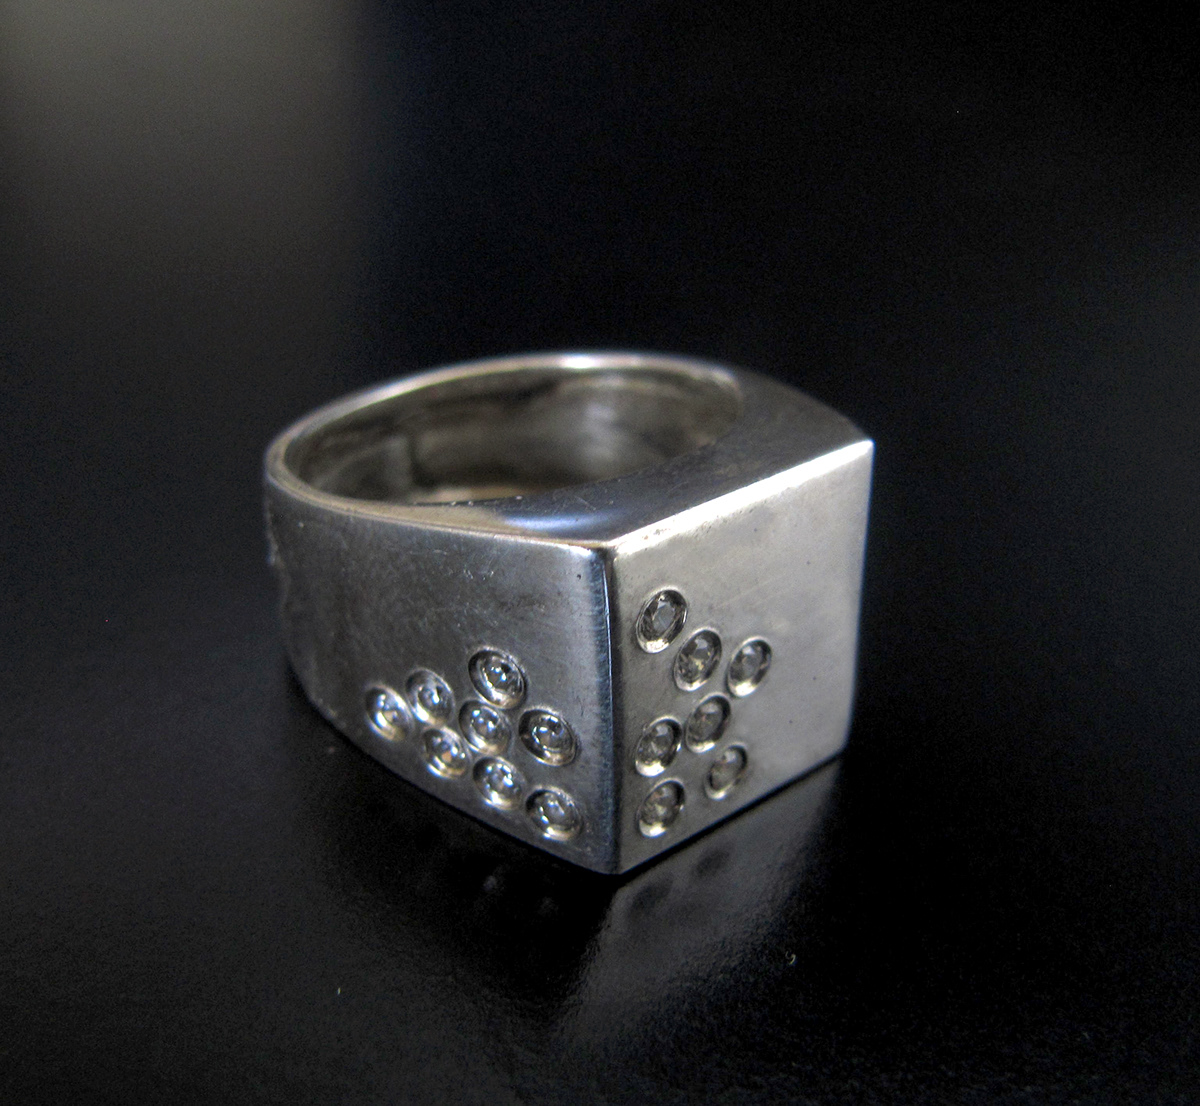 Classic jewelry gemstones granulation casting silver metal